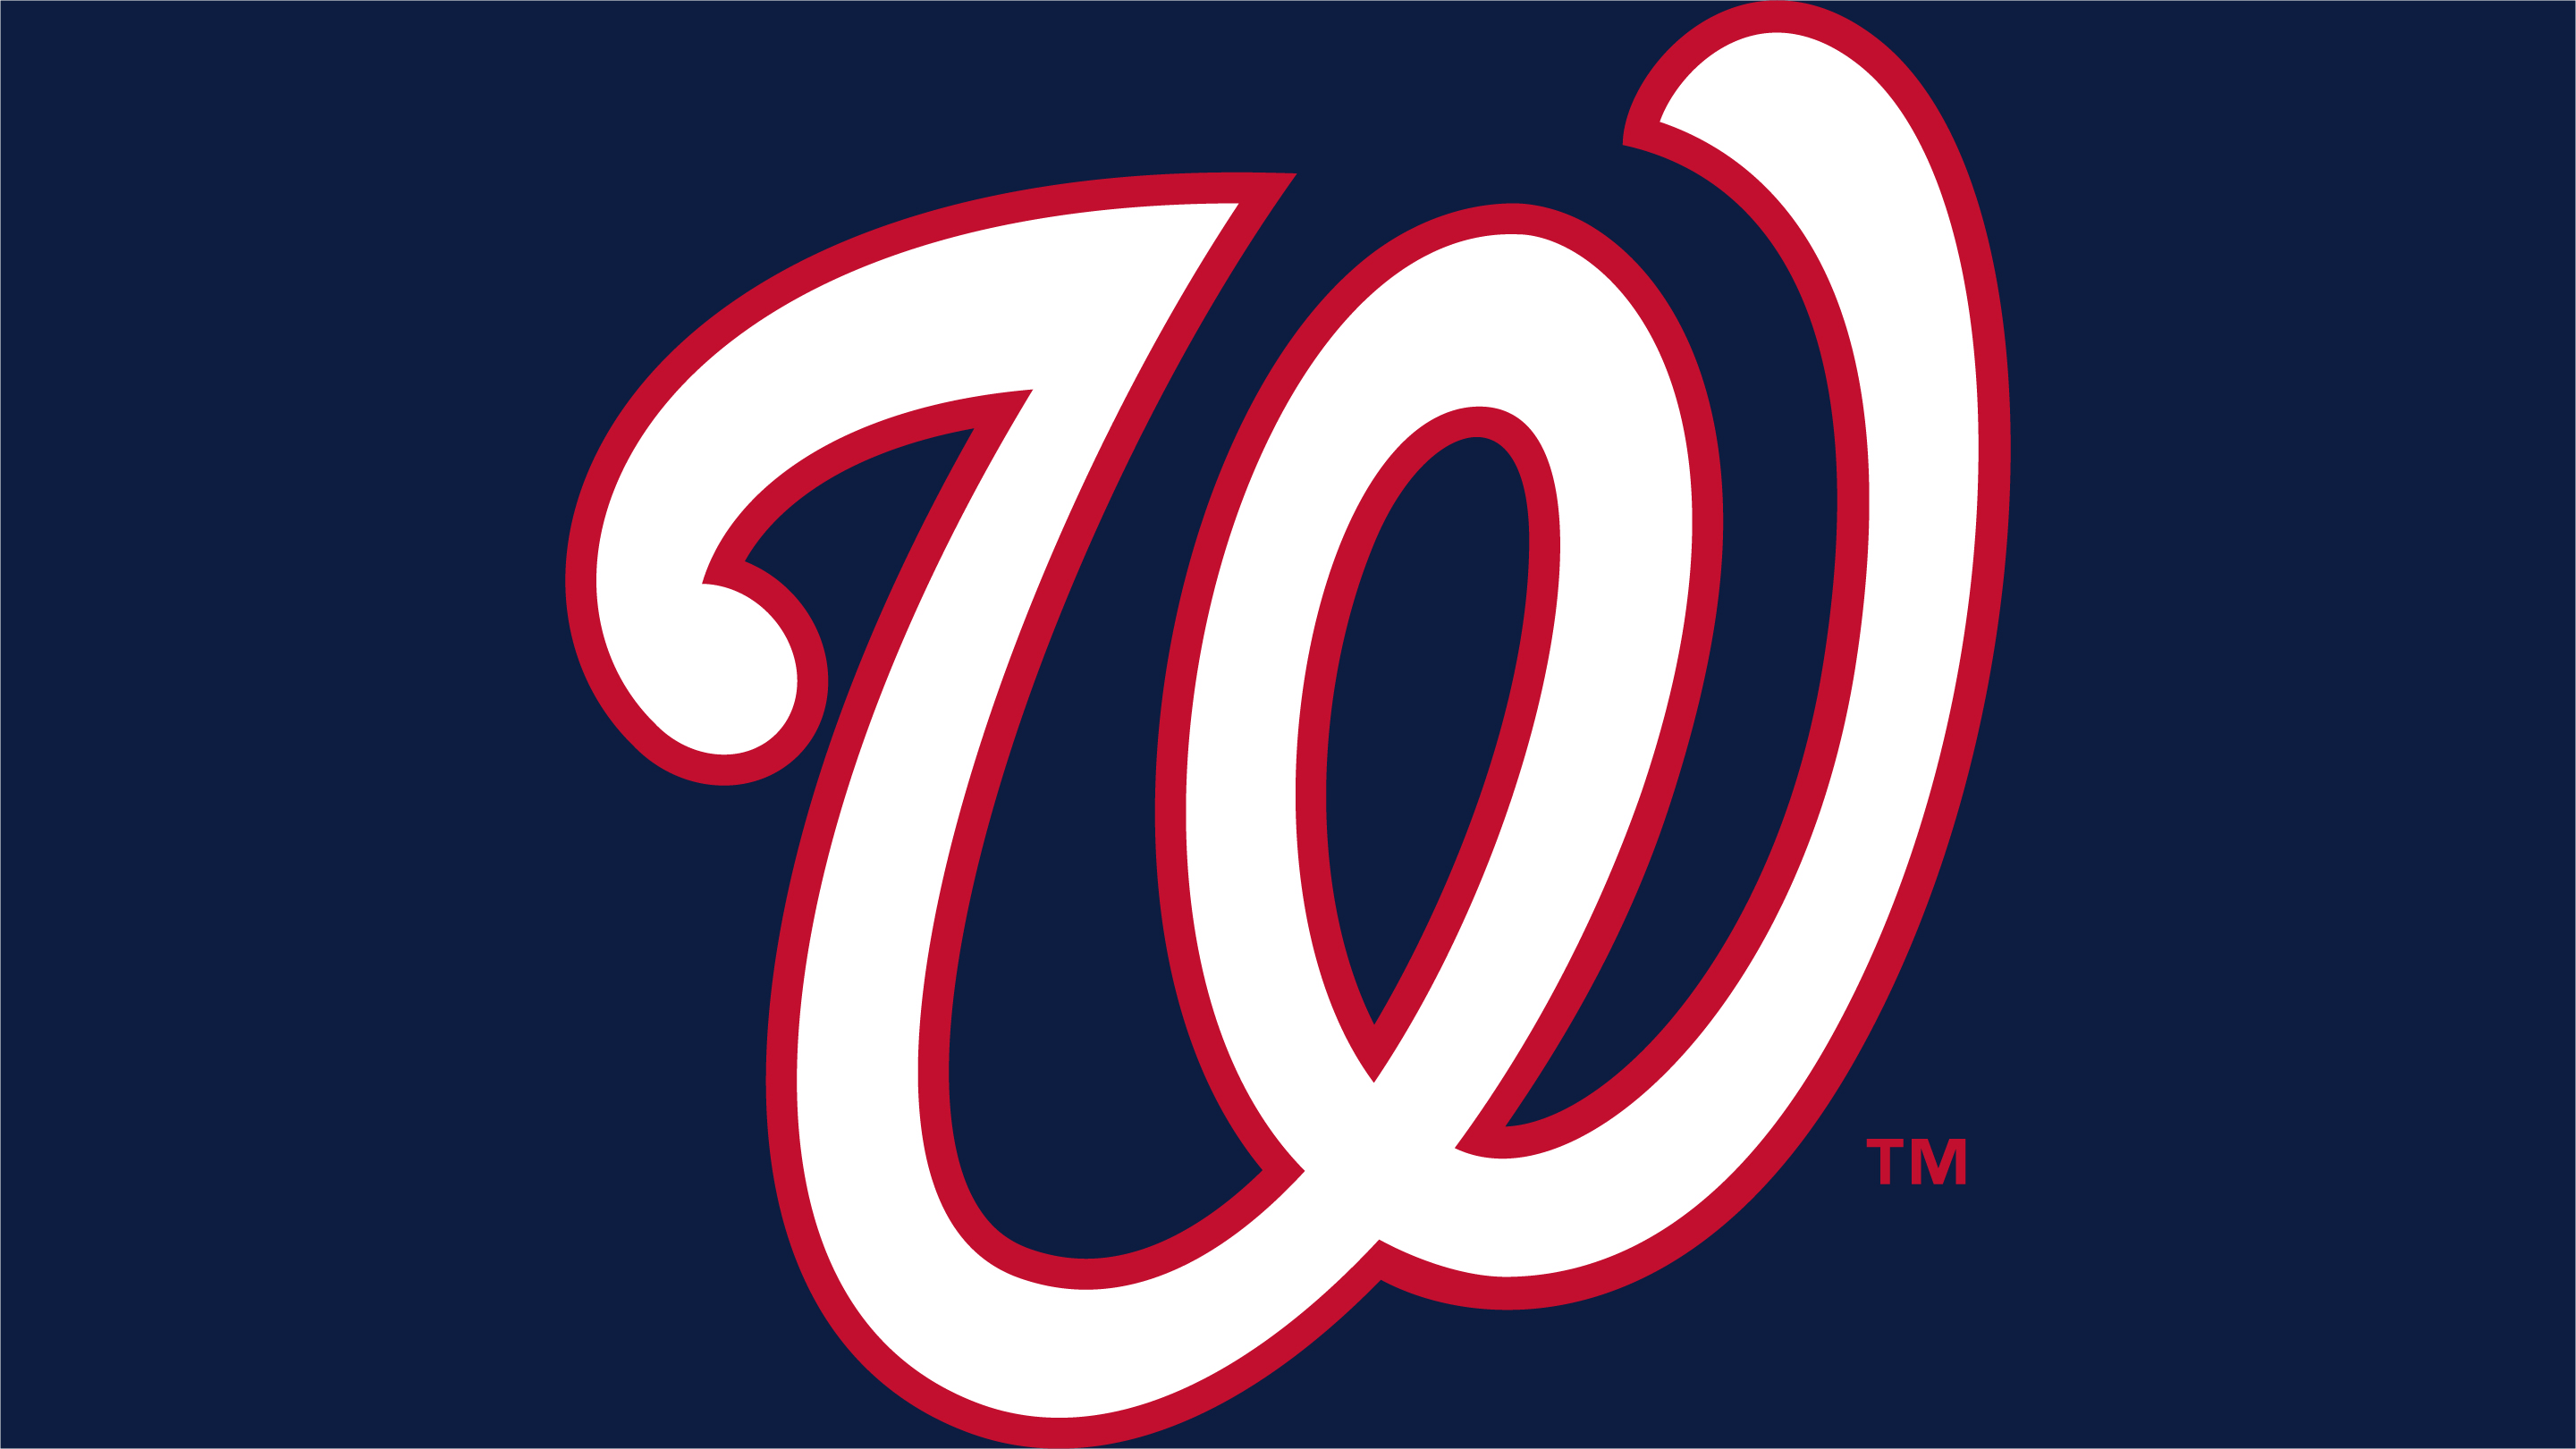 Washington Nationals All Star Game Baseball Logo 2023 Shirt - Freedomdesign